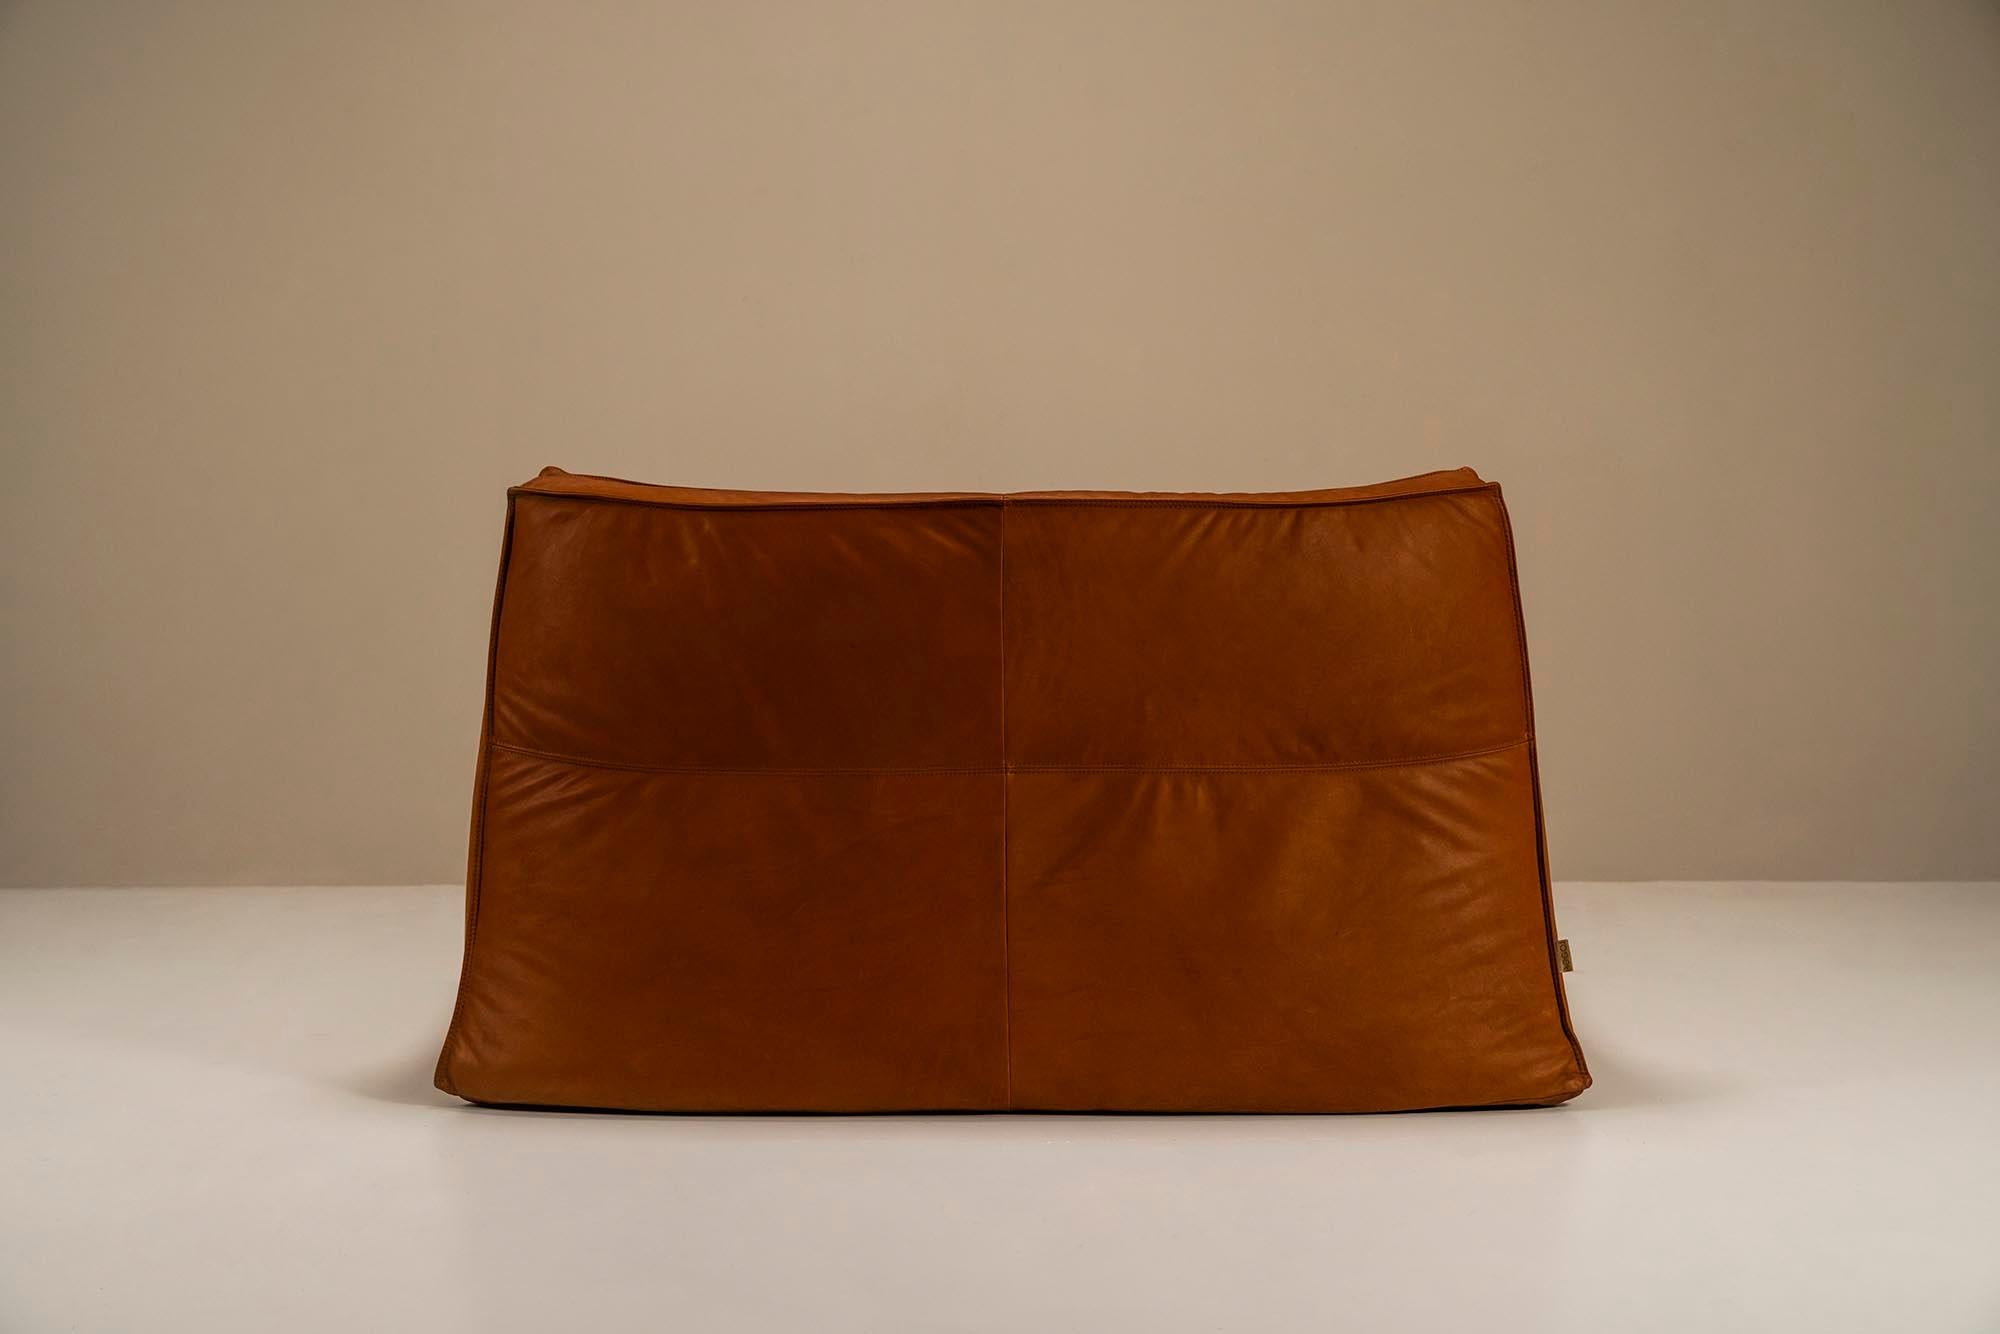 Leather Two-Seater Sofa Model “Satan” By Bernard Govin For Ligne Roset, France 1970s For Sale